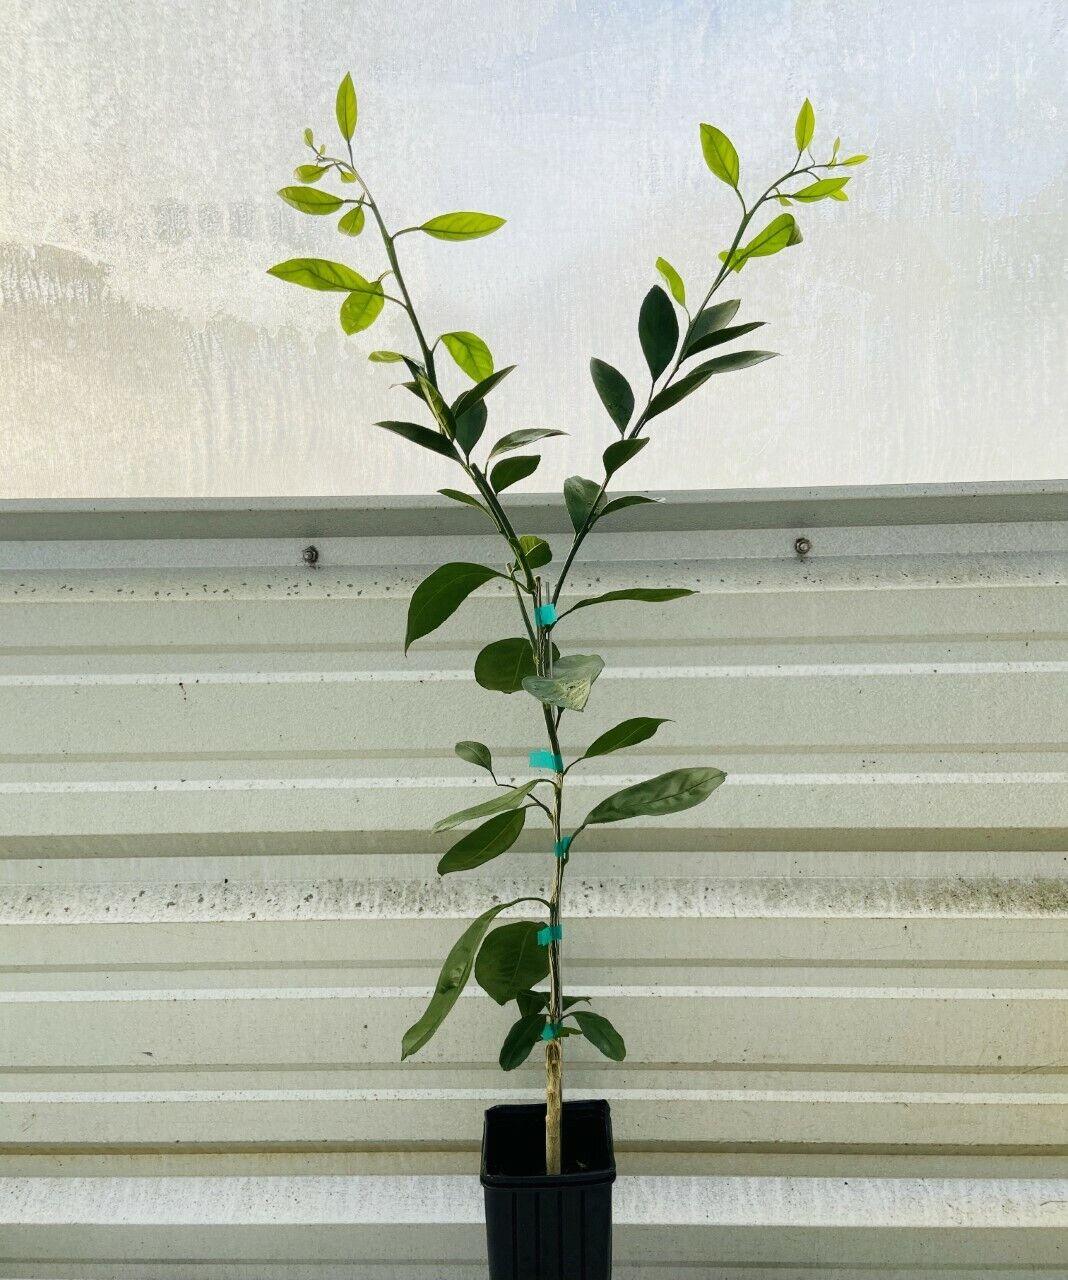 Dwarf Brown Select Satsuma Orange Tree - 16-24" Tall Live Citrus Plant - Gallon Pot - The Nursery Center